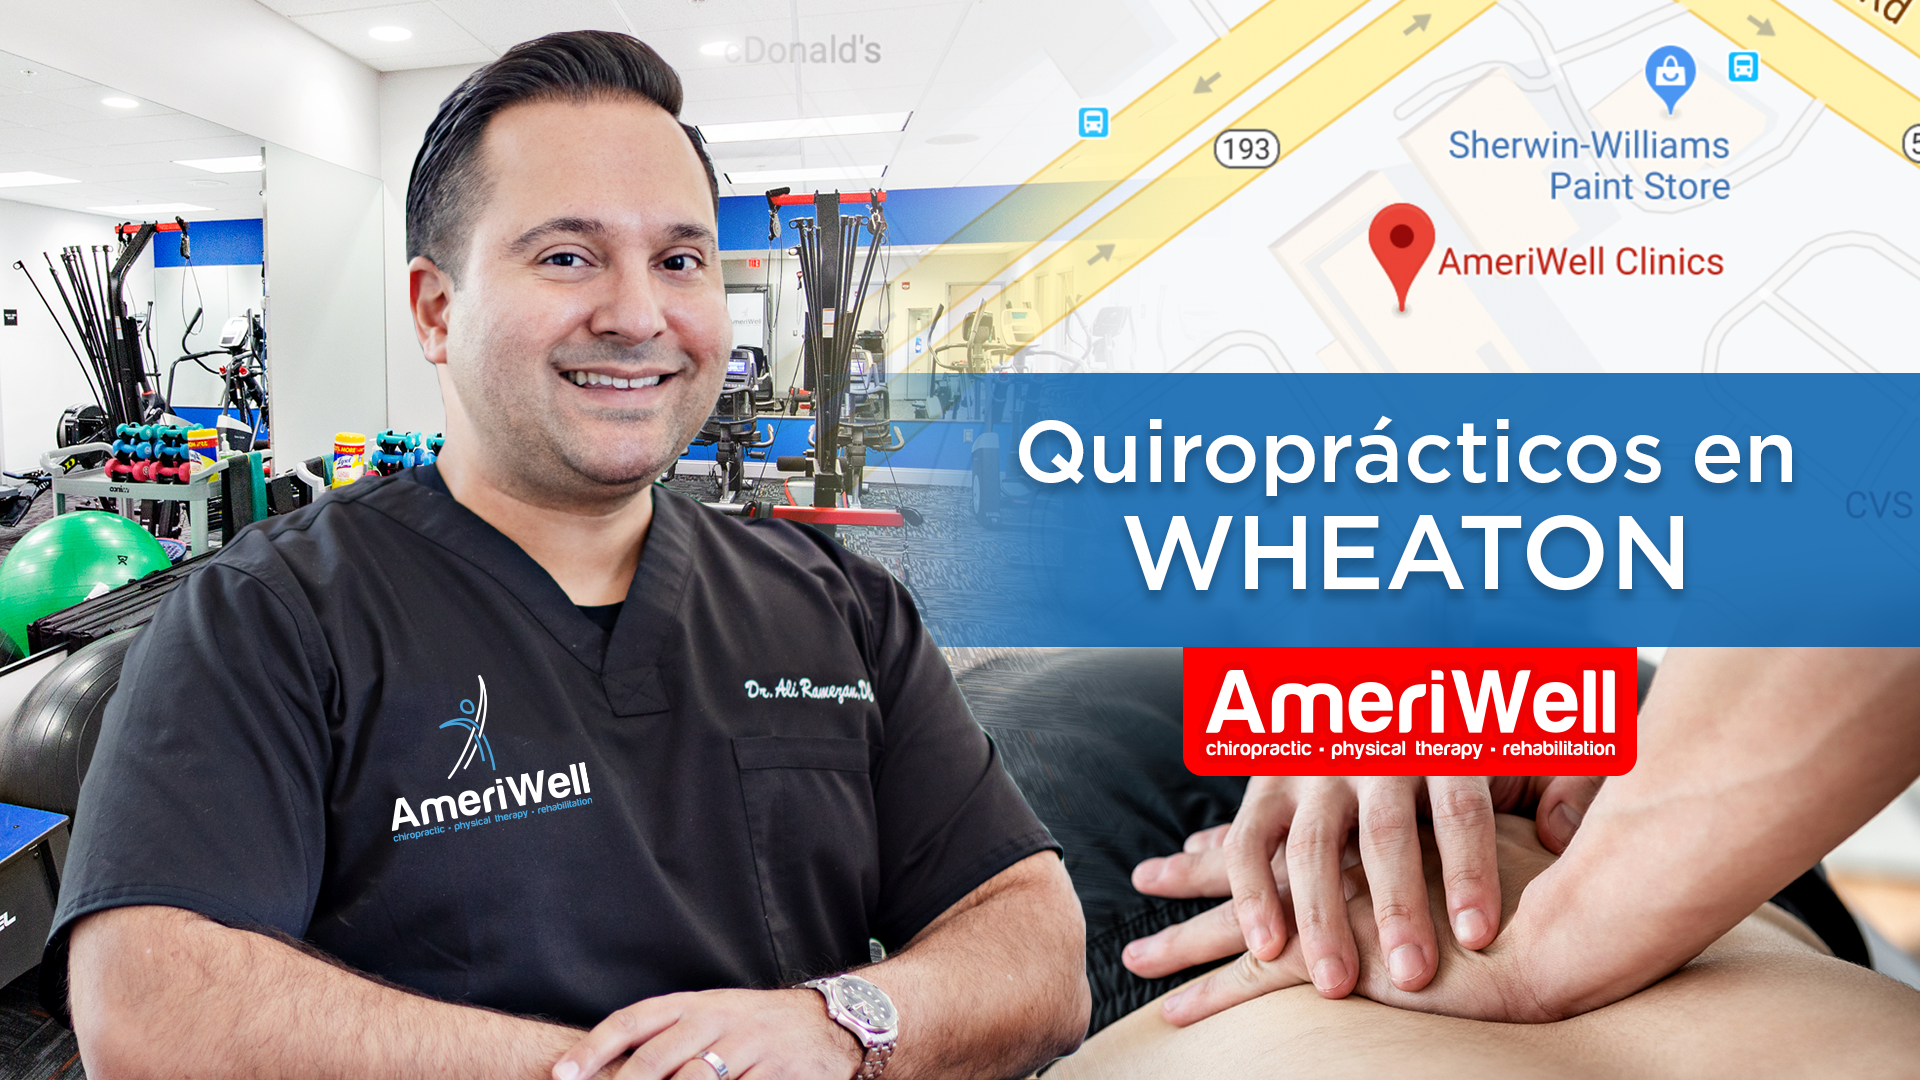 Wheaton - Ameriwell Clinics los mejores Quiropracticos